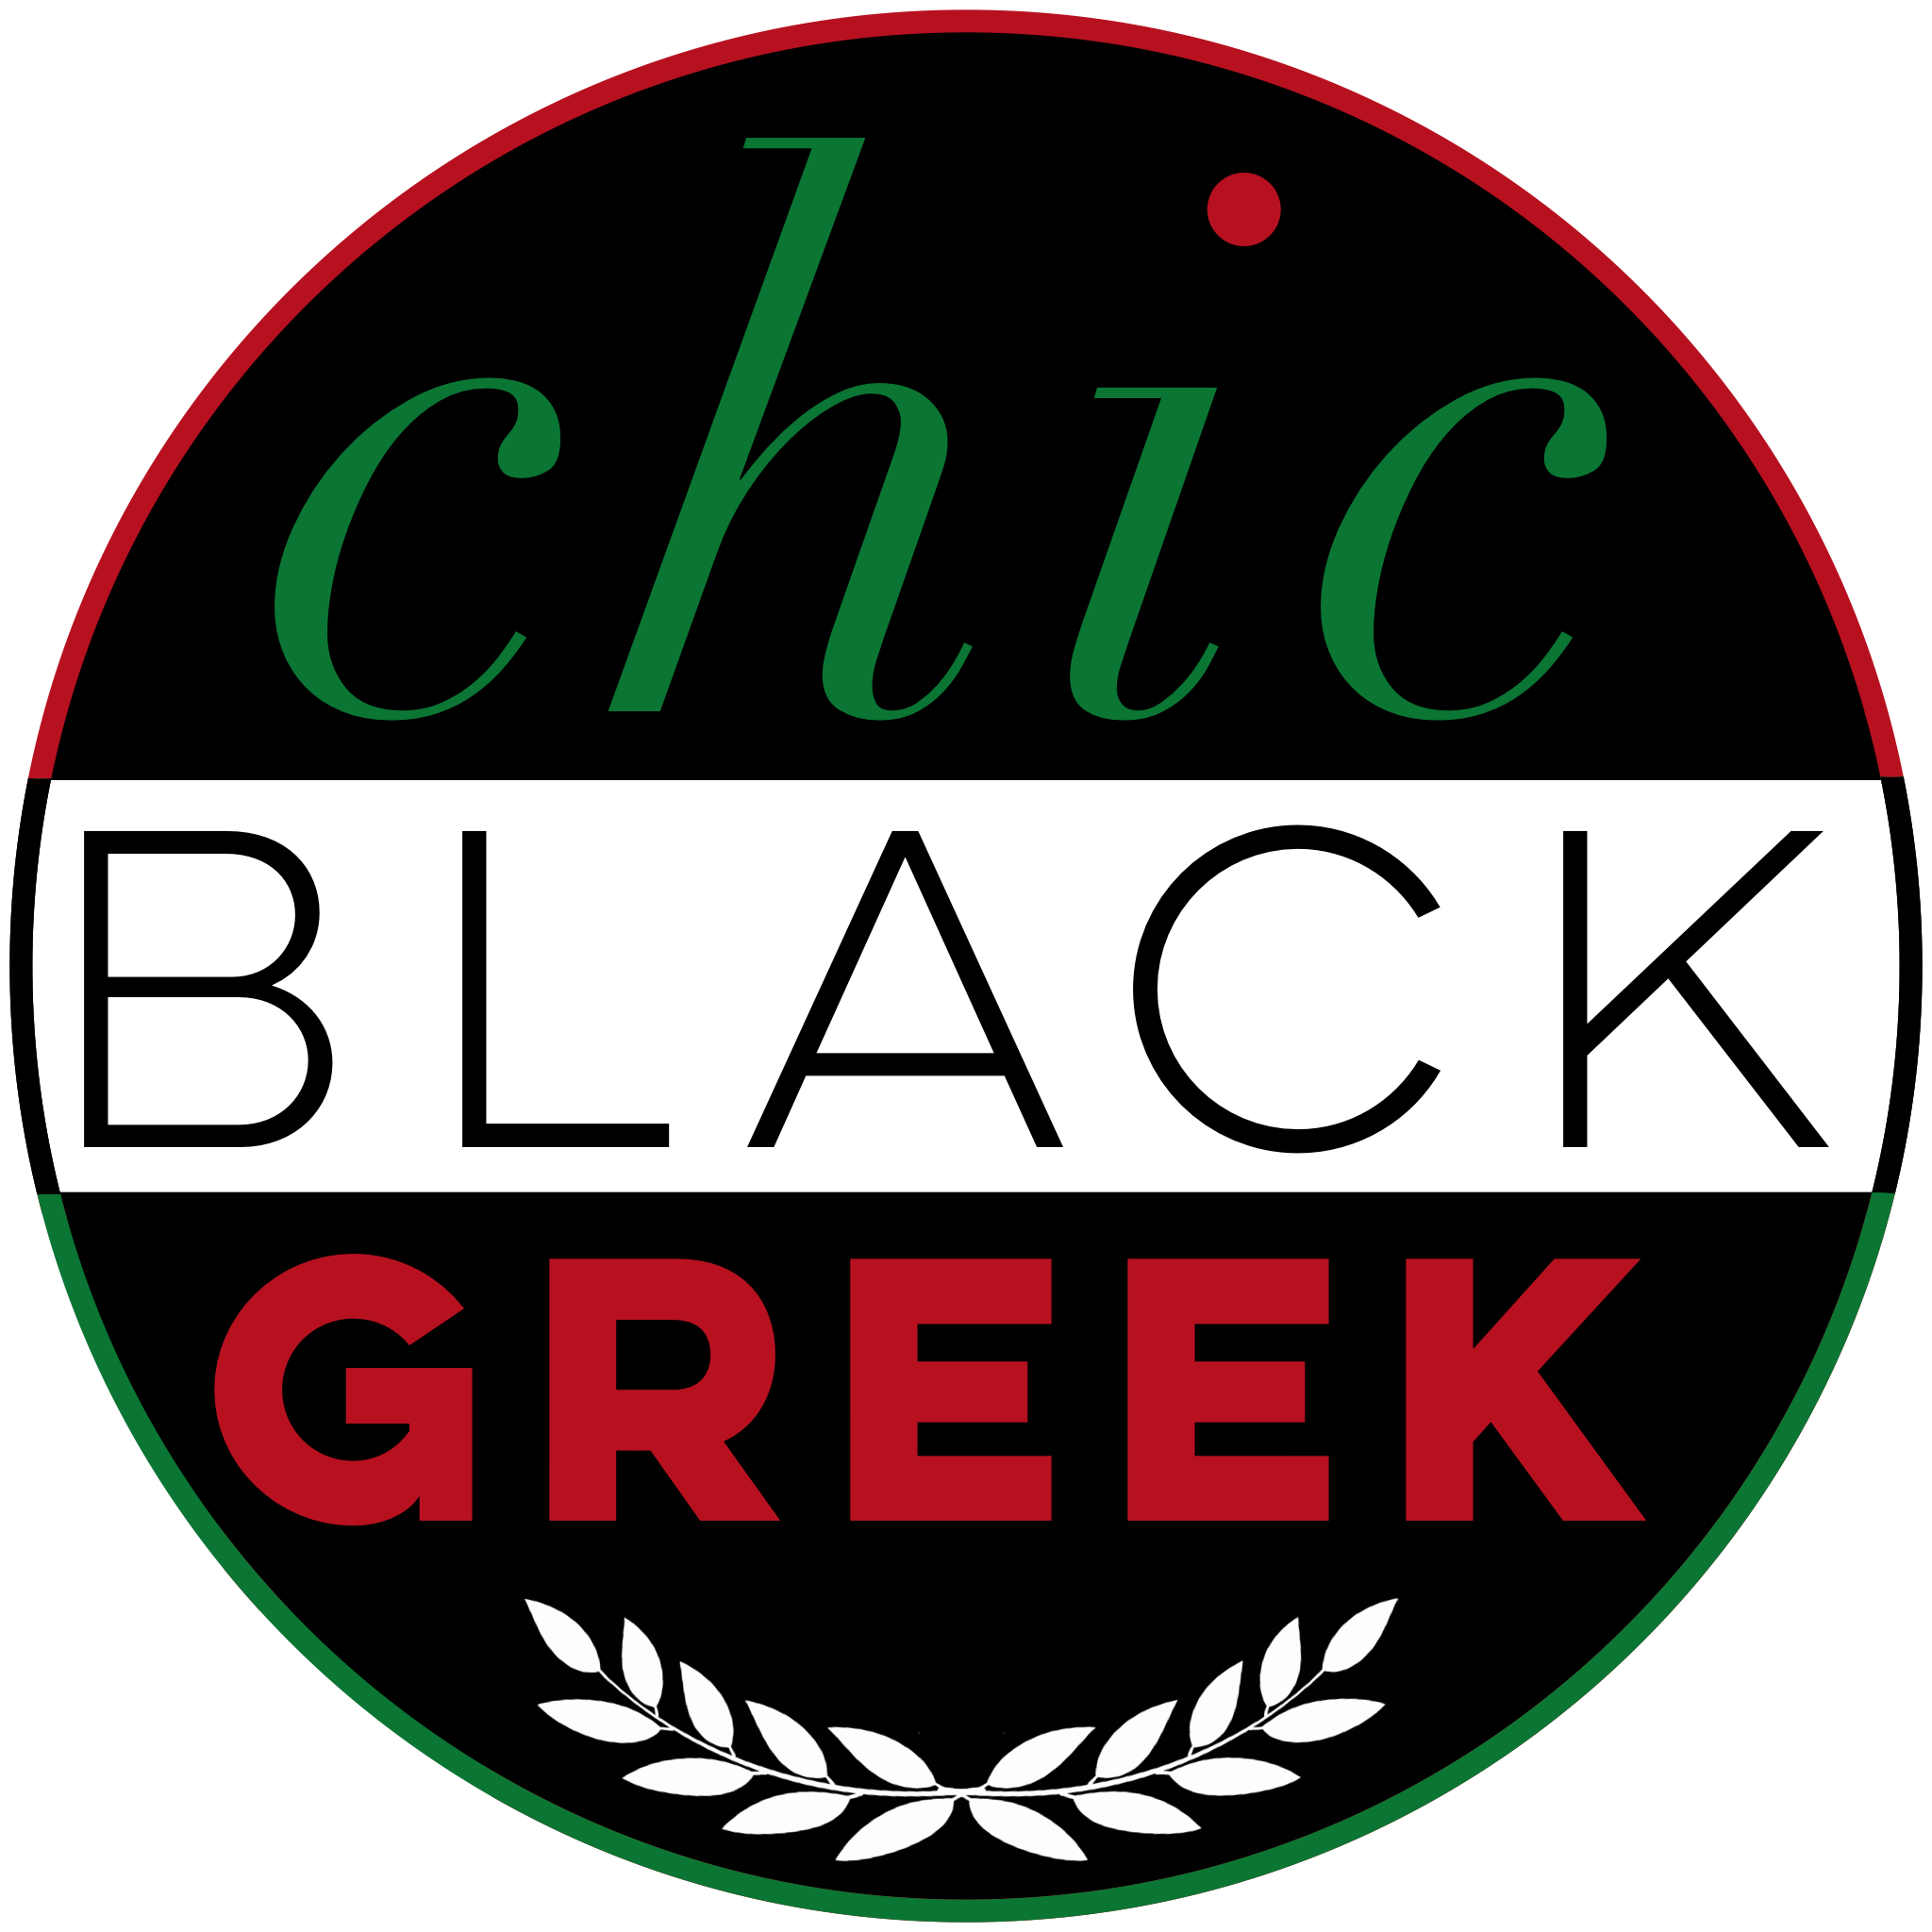 Chic Black Greek